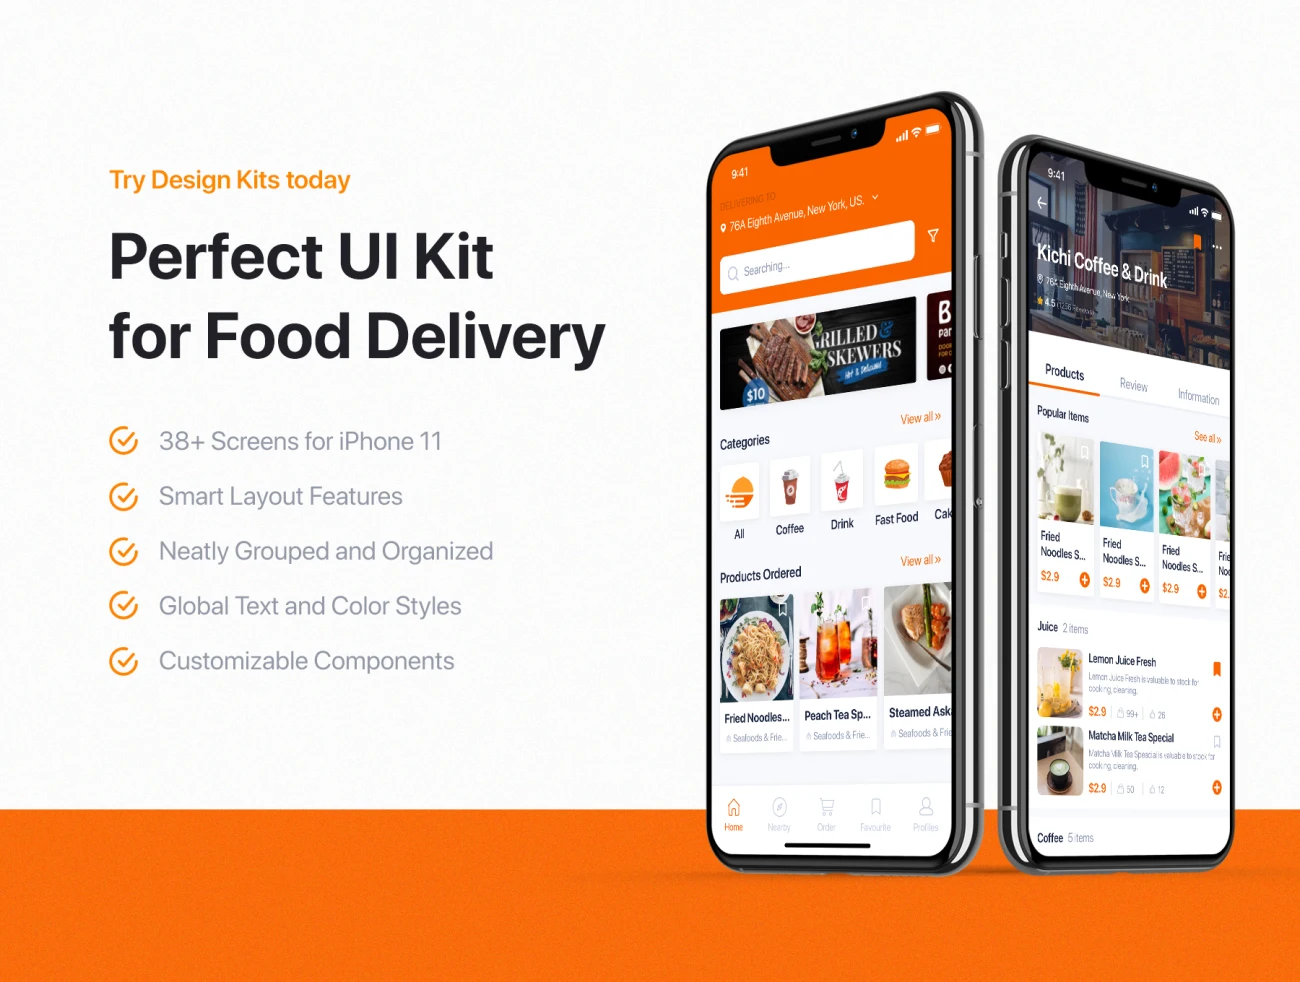 GonEats - Food Delivery UI Kit 点餐外卖食品配送UI套件-3D/图标、UI/UX、ui套件、主页、介绍、付款、列表、卡片式、应用、引导页、注册、登录页、着陆页、网站、网购、详情、预订-到位啦UI